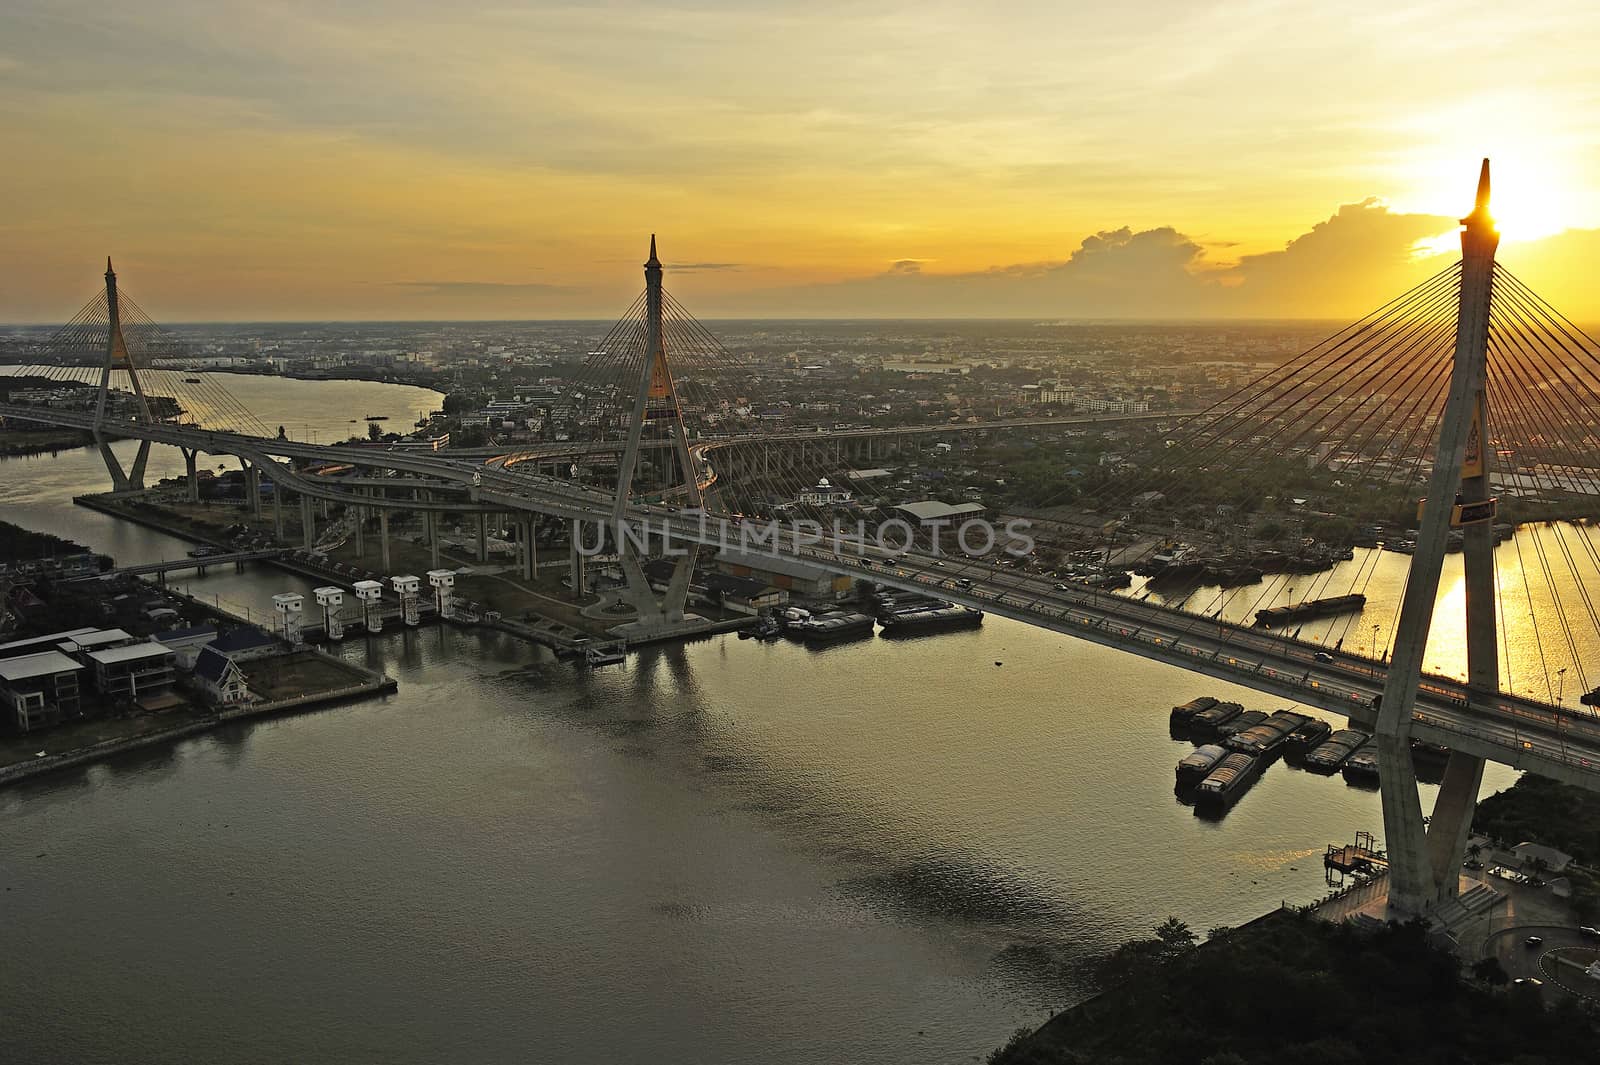 view of the Bhumibol bridge (Bangkok, Thailand) by think4photop